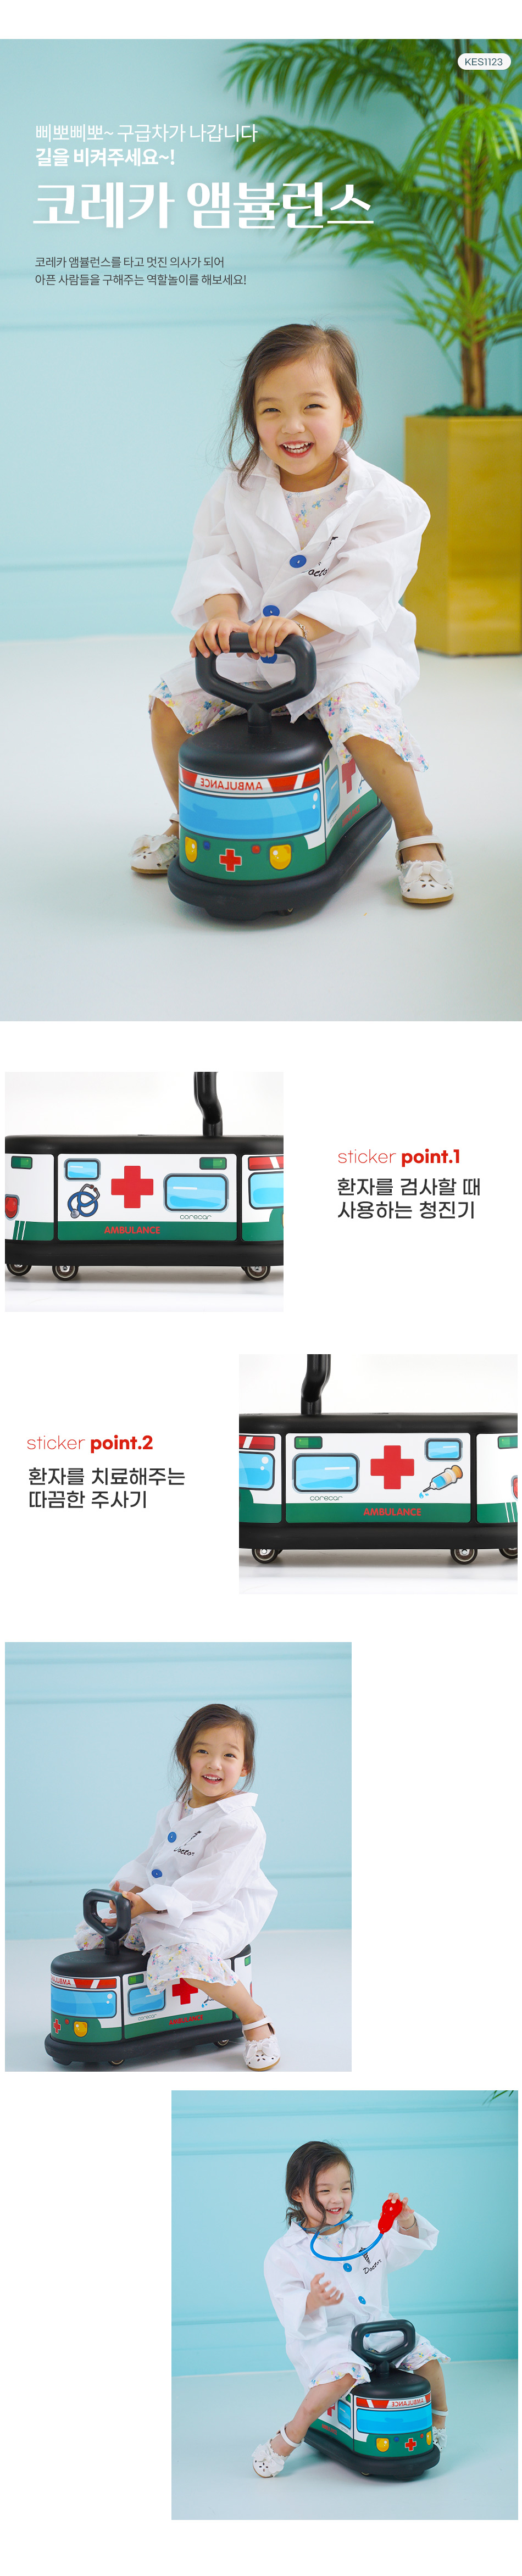 04_ambulance.jpg